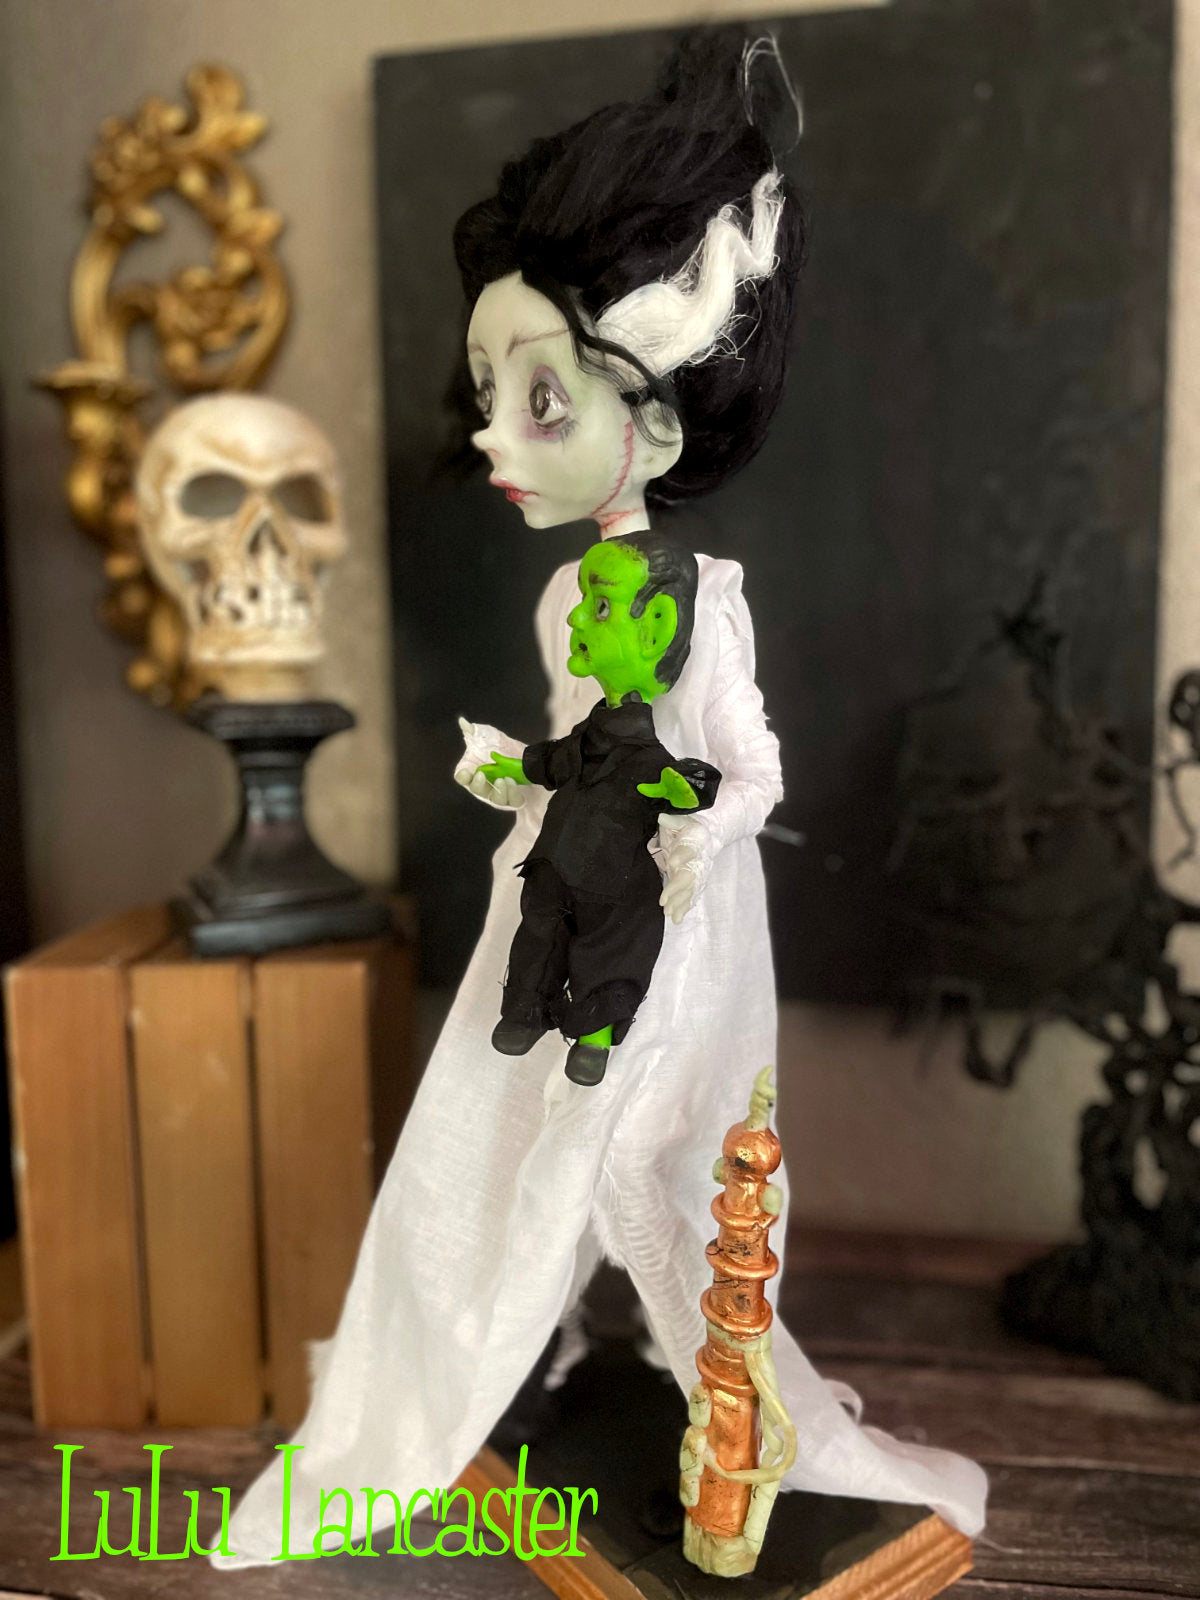 The Bride Original LuLu Lancaster Halloween Art Doll